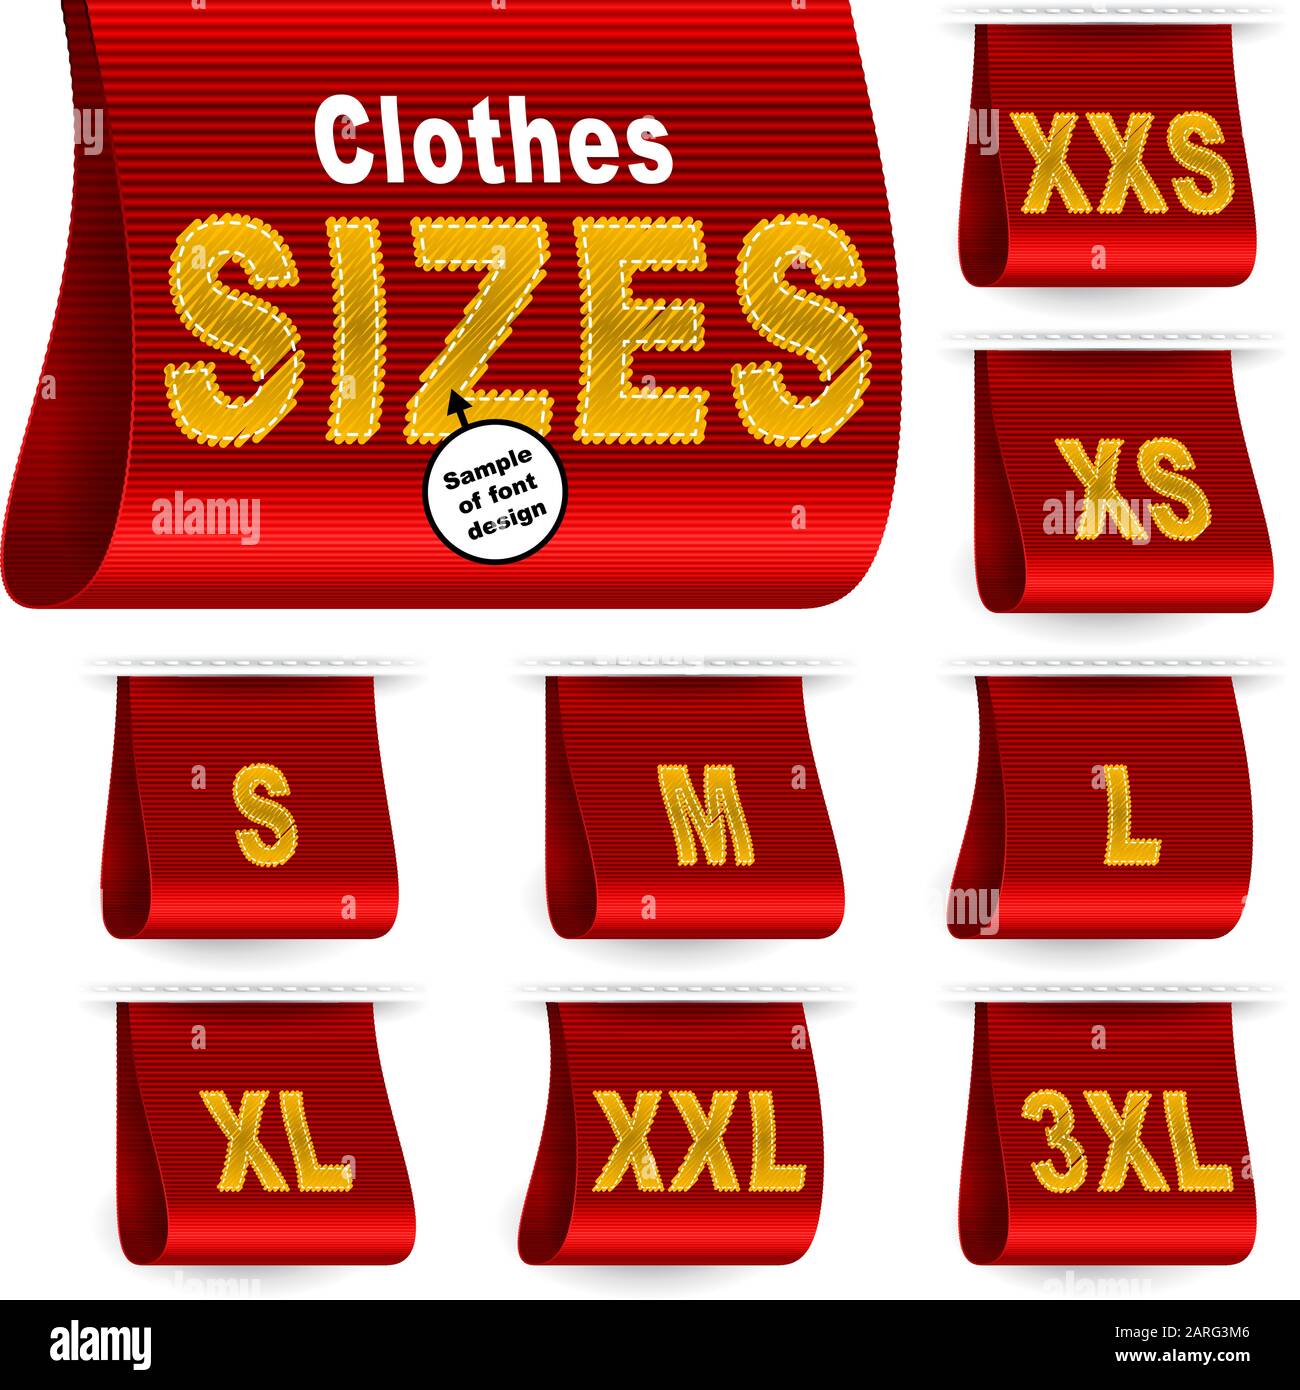 Clothes size labels with standard designation symbols of garment